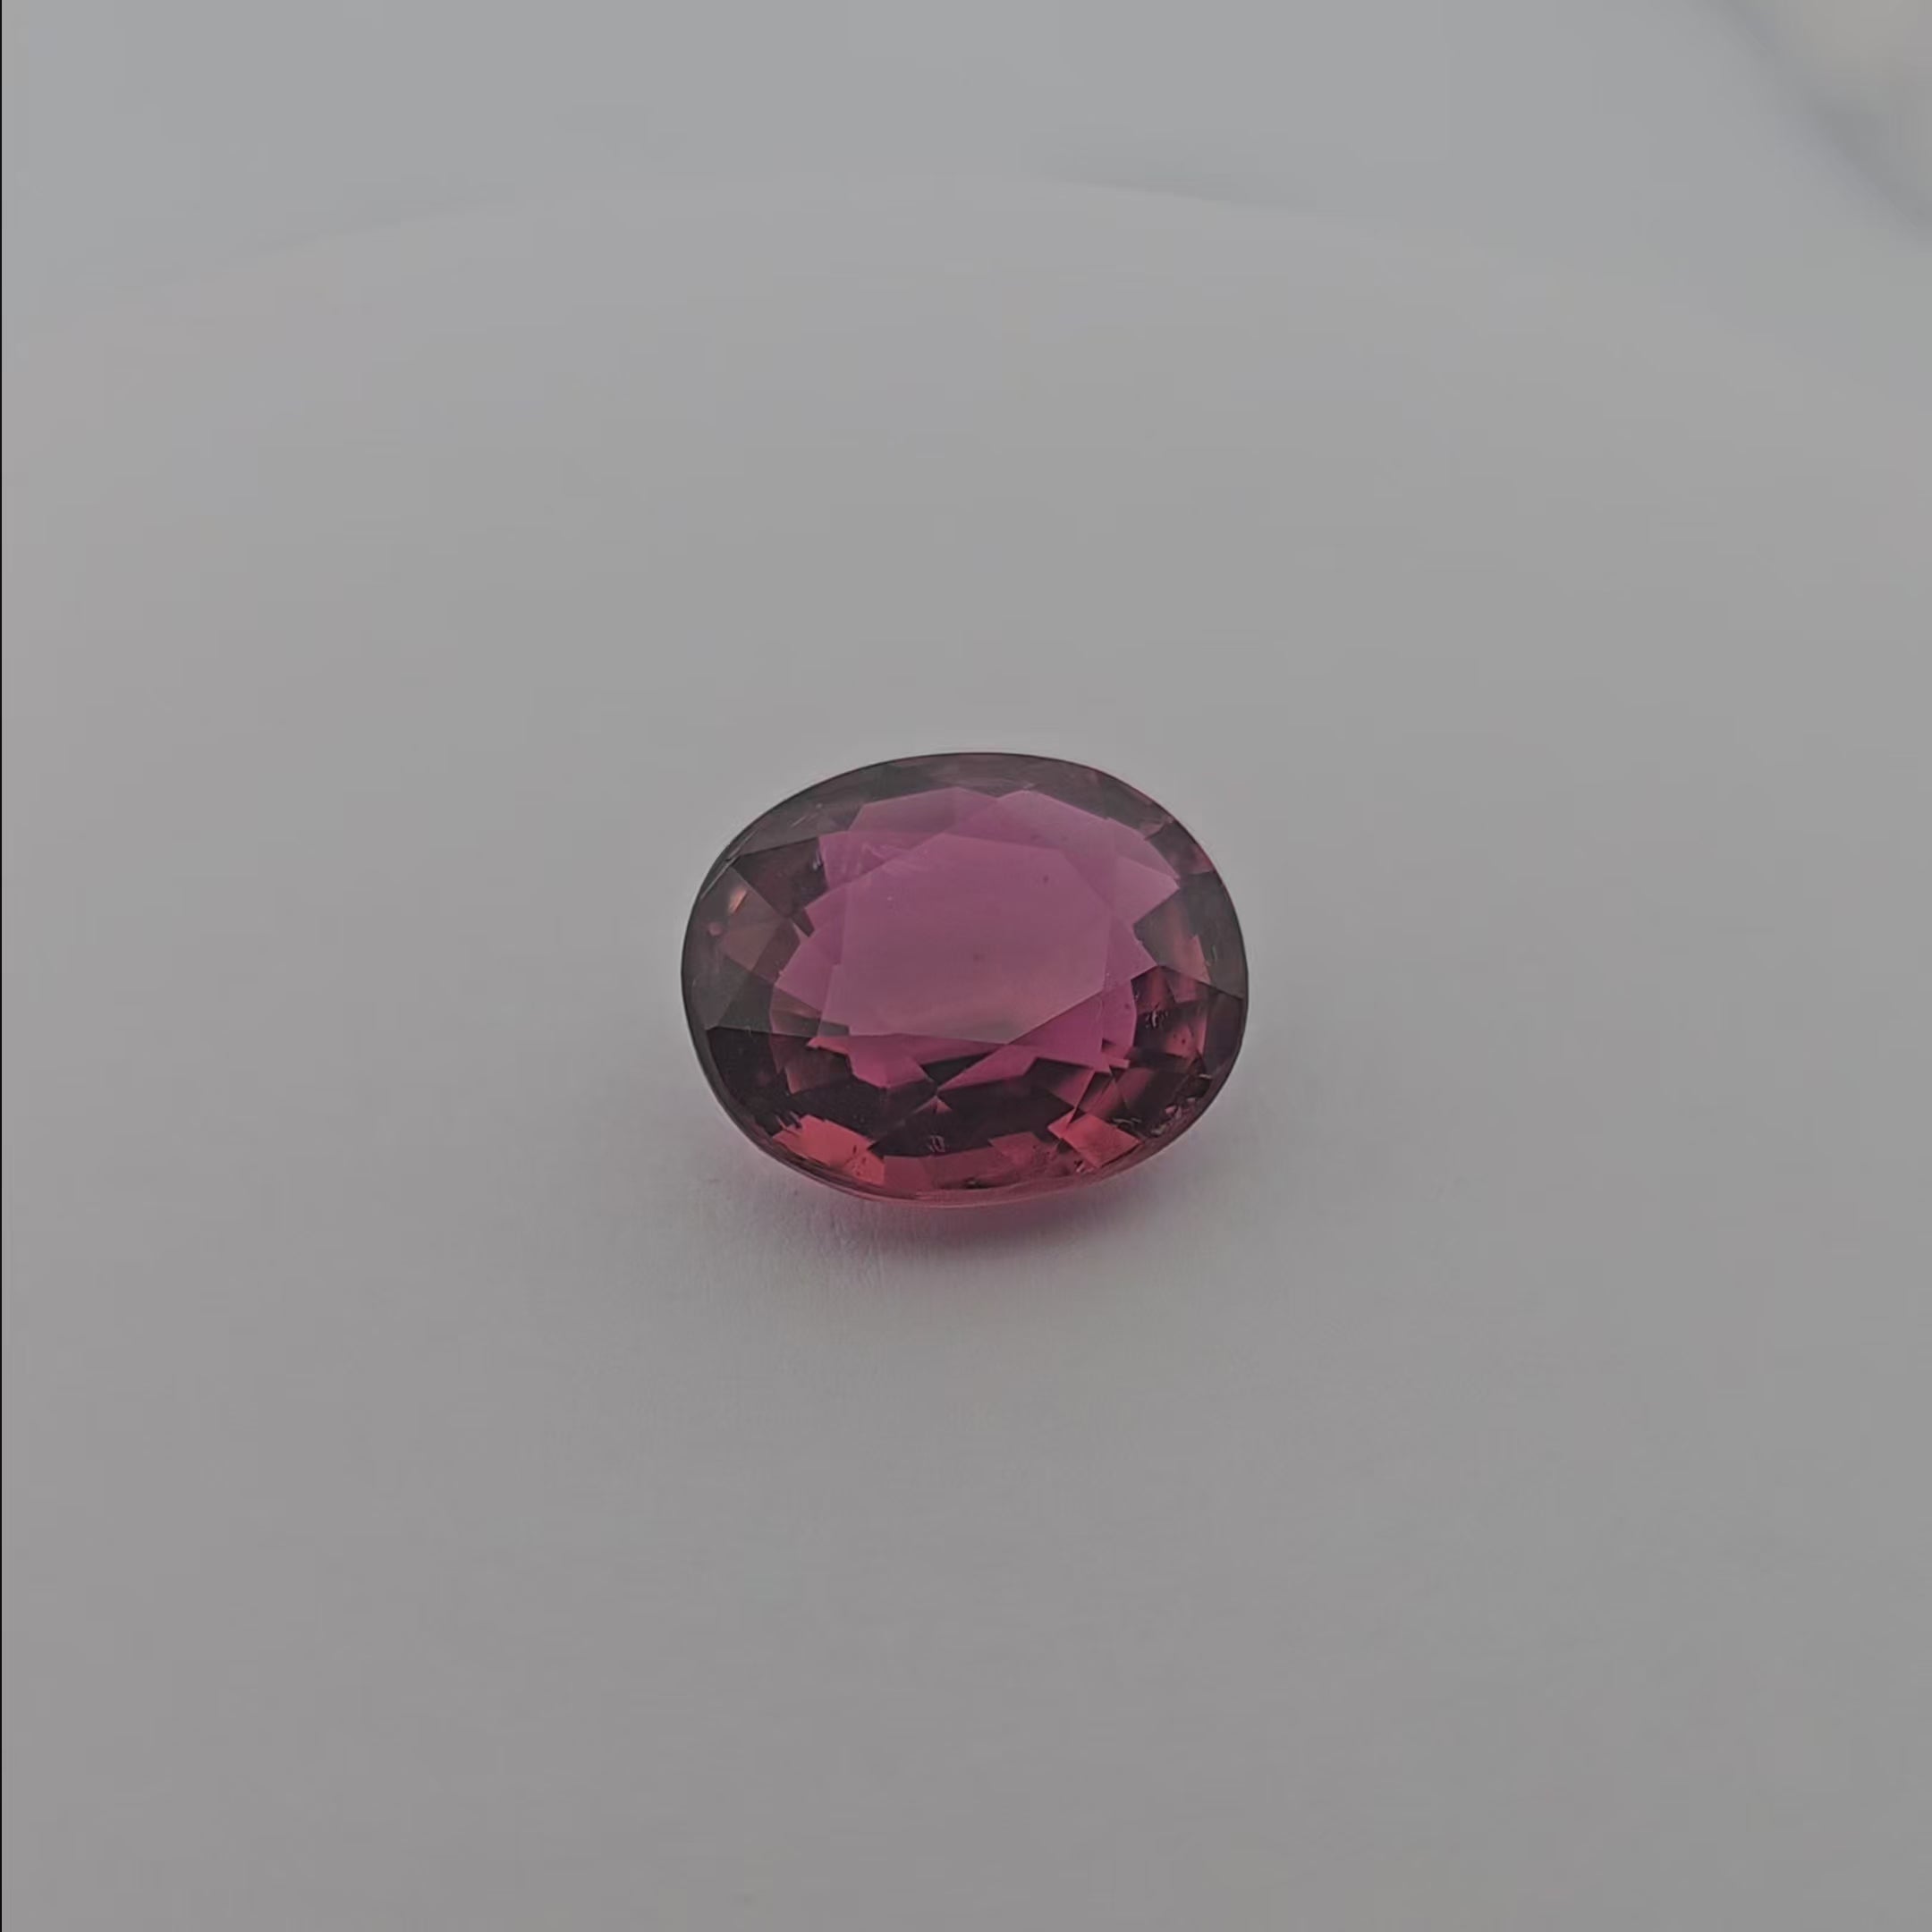 loose Natural Pink Tourmaline Stone 8.36 Carats Oval Shape (14 x 12  mm)